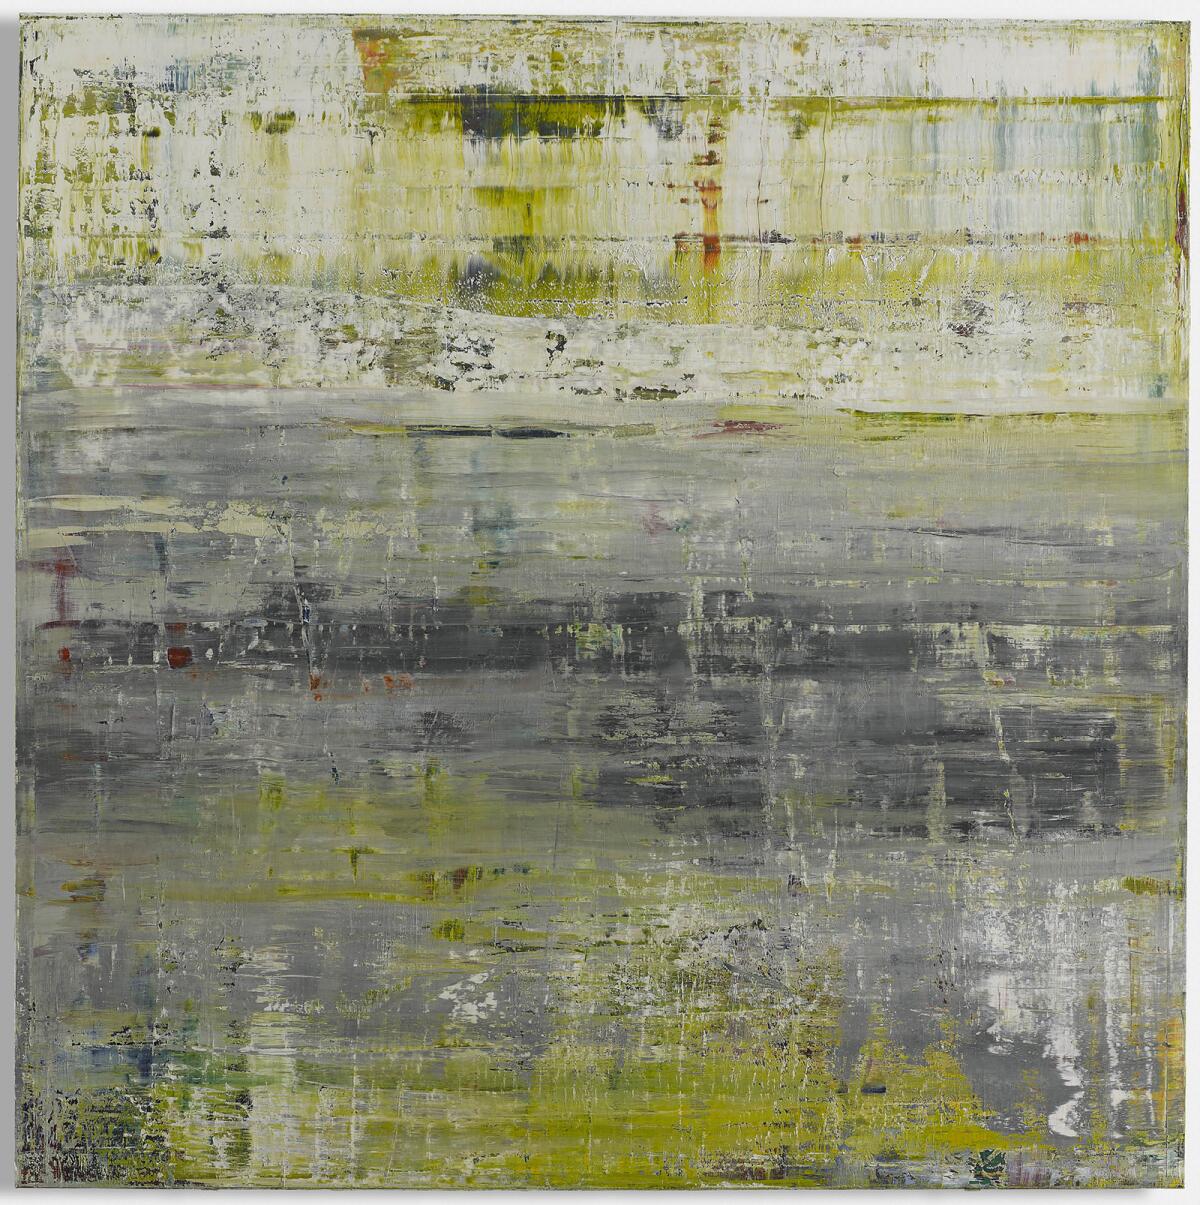 Gerhard Richter, "Cage 2," 2006, oil on canvas